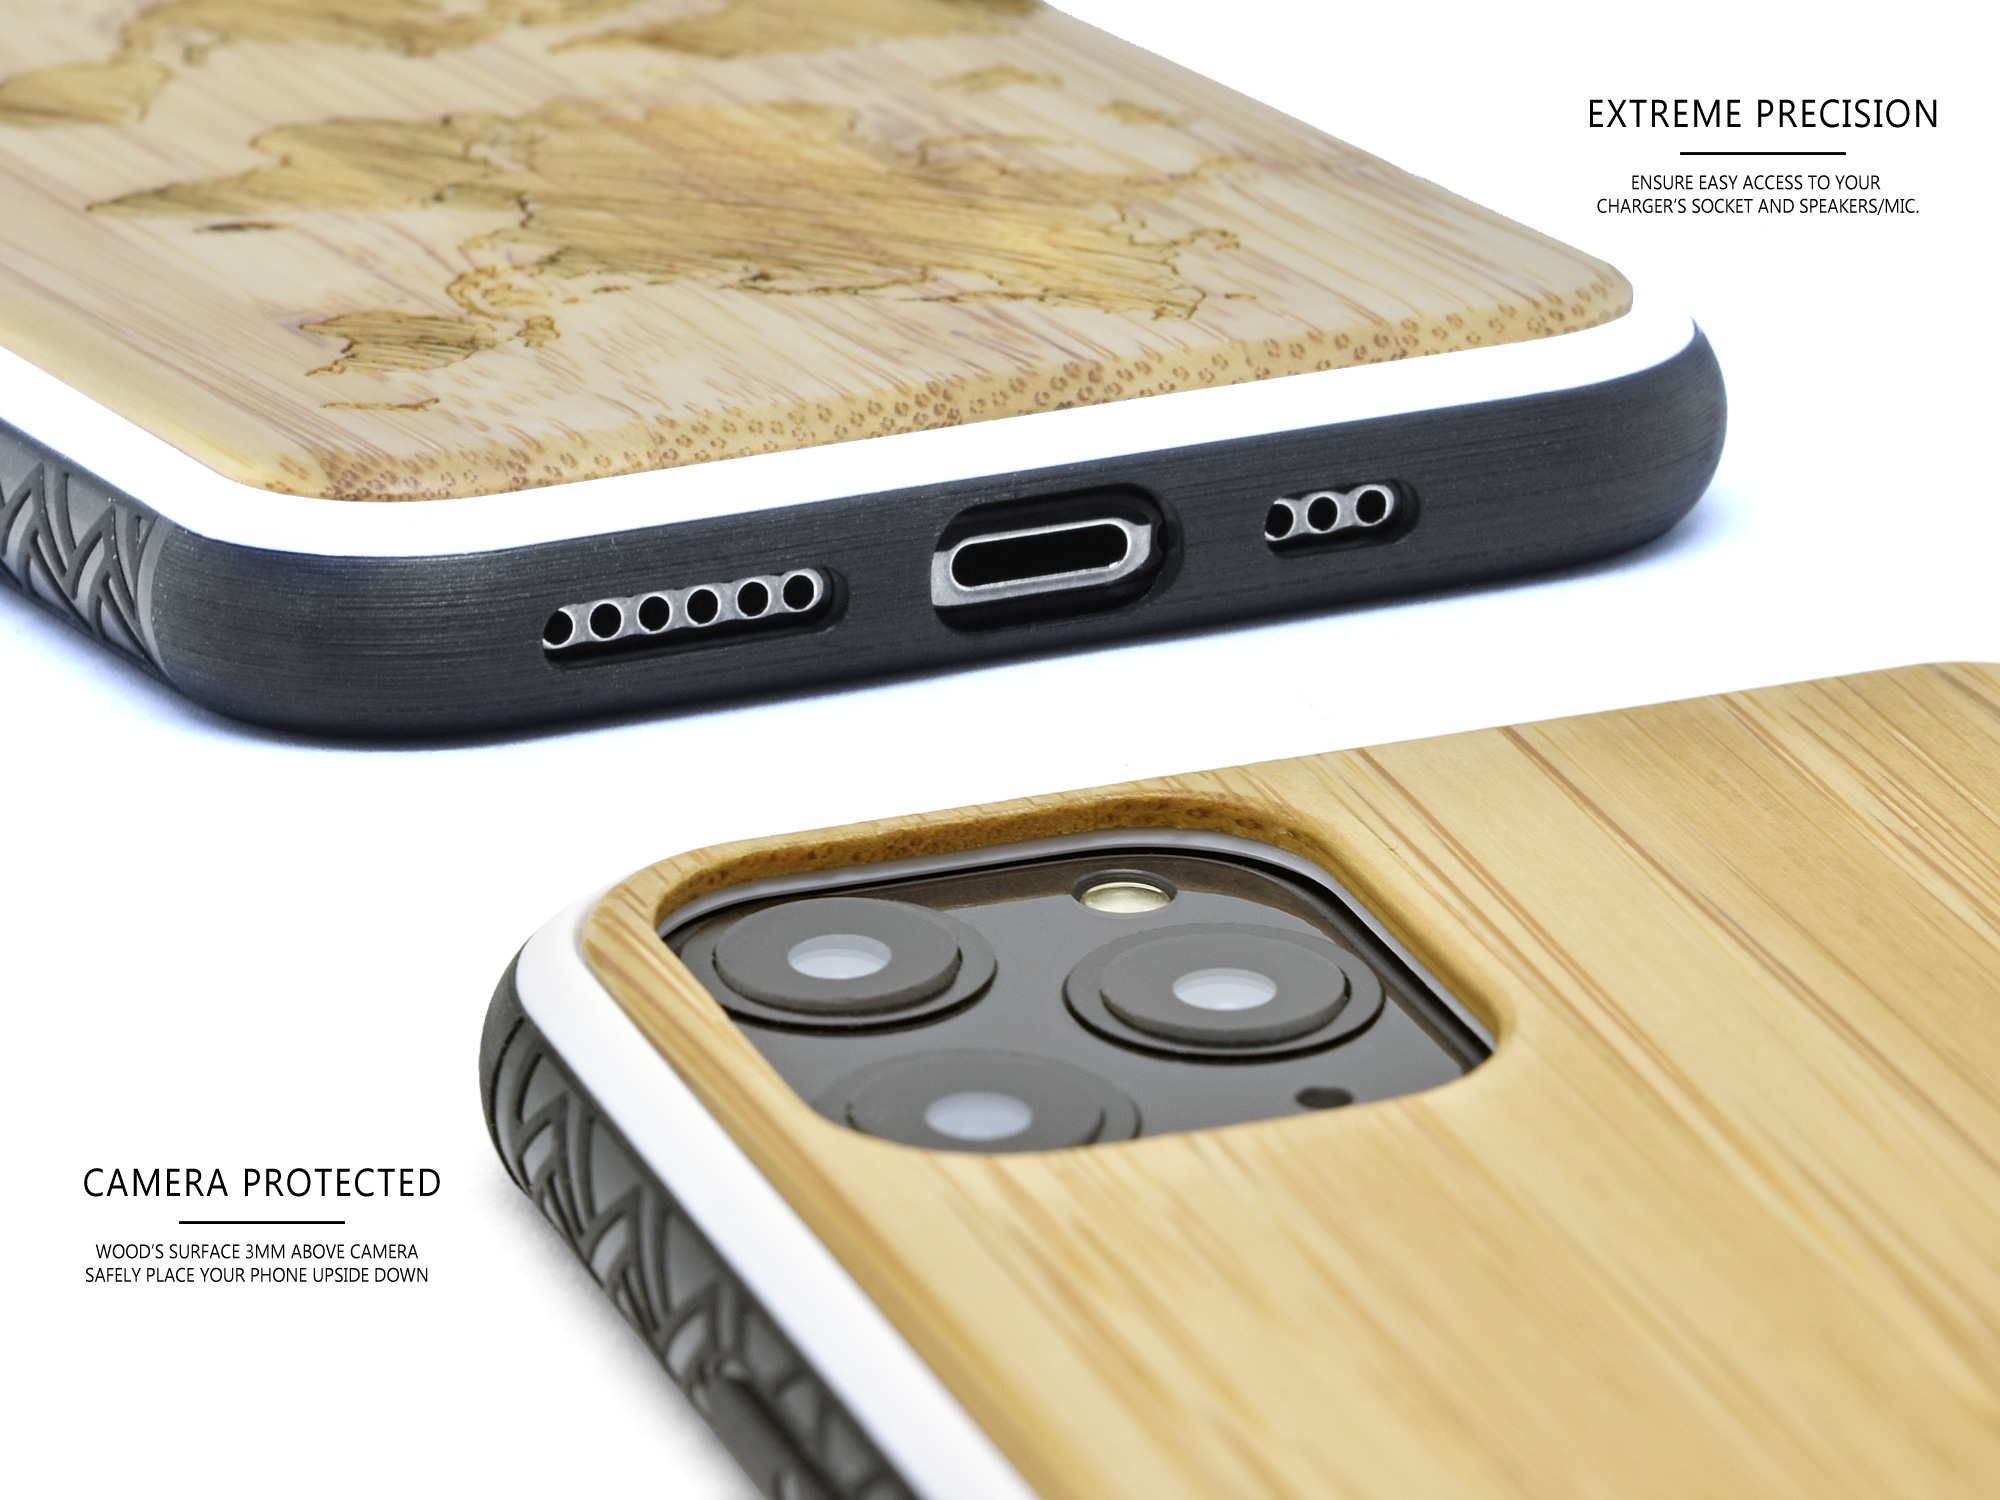 iPhone 11 Pro wood case bamboo world map